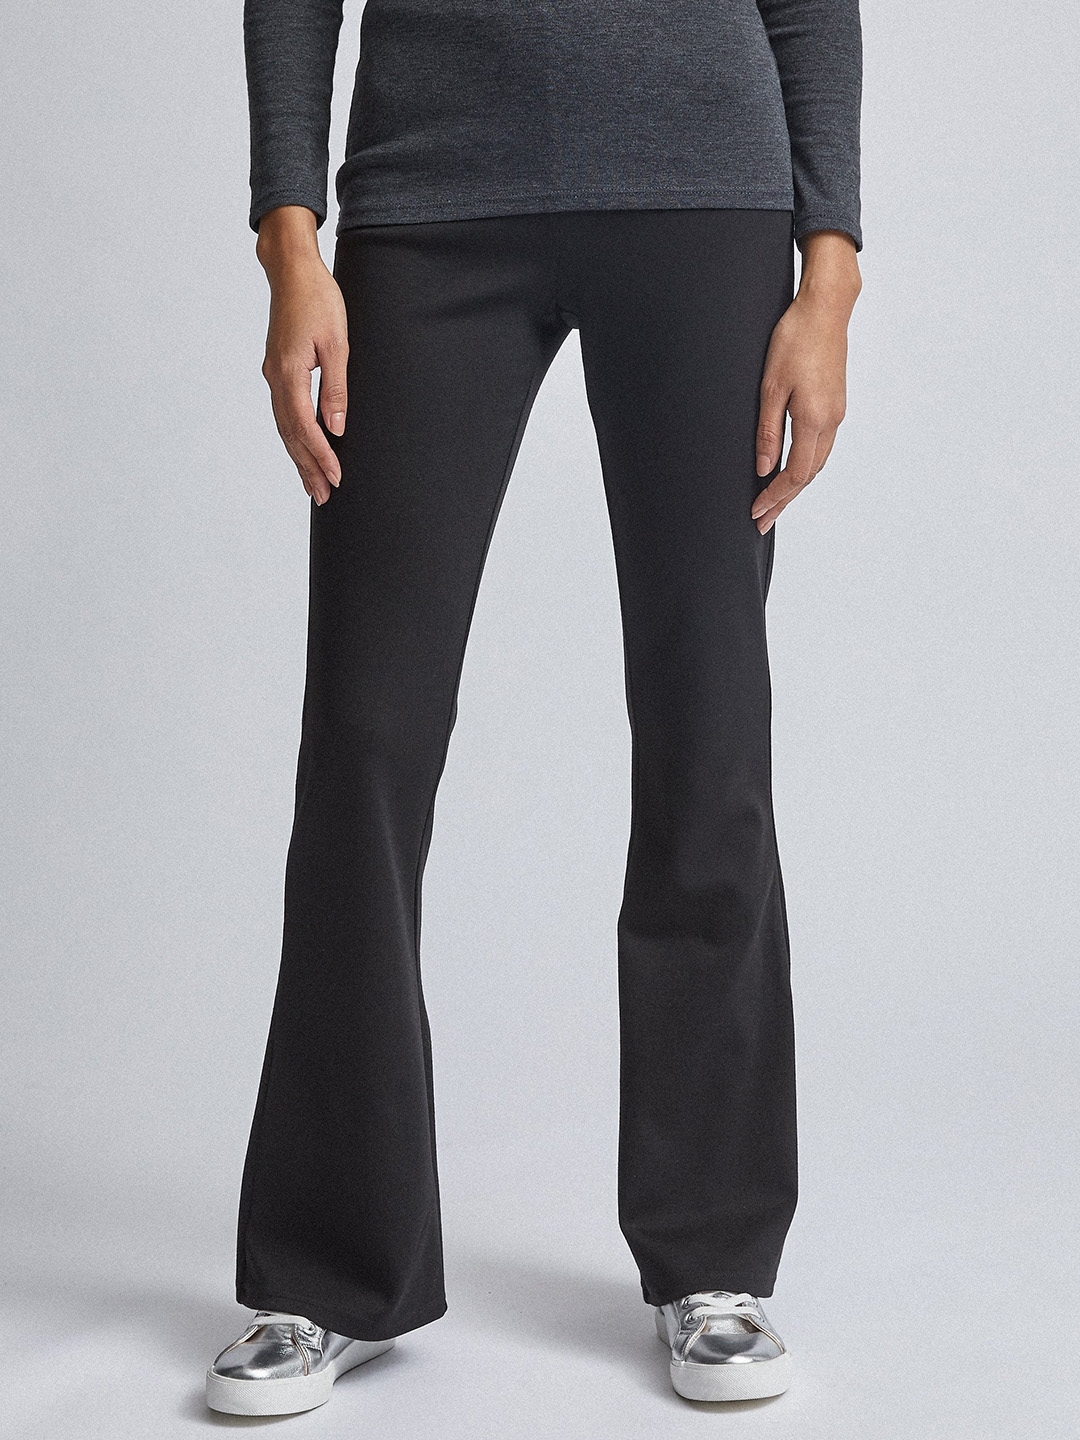 Buy DOROTHY PERKINS Women Black Regular Fit Solid Bootcut Trousers ...